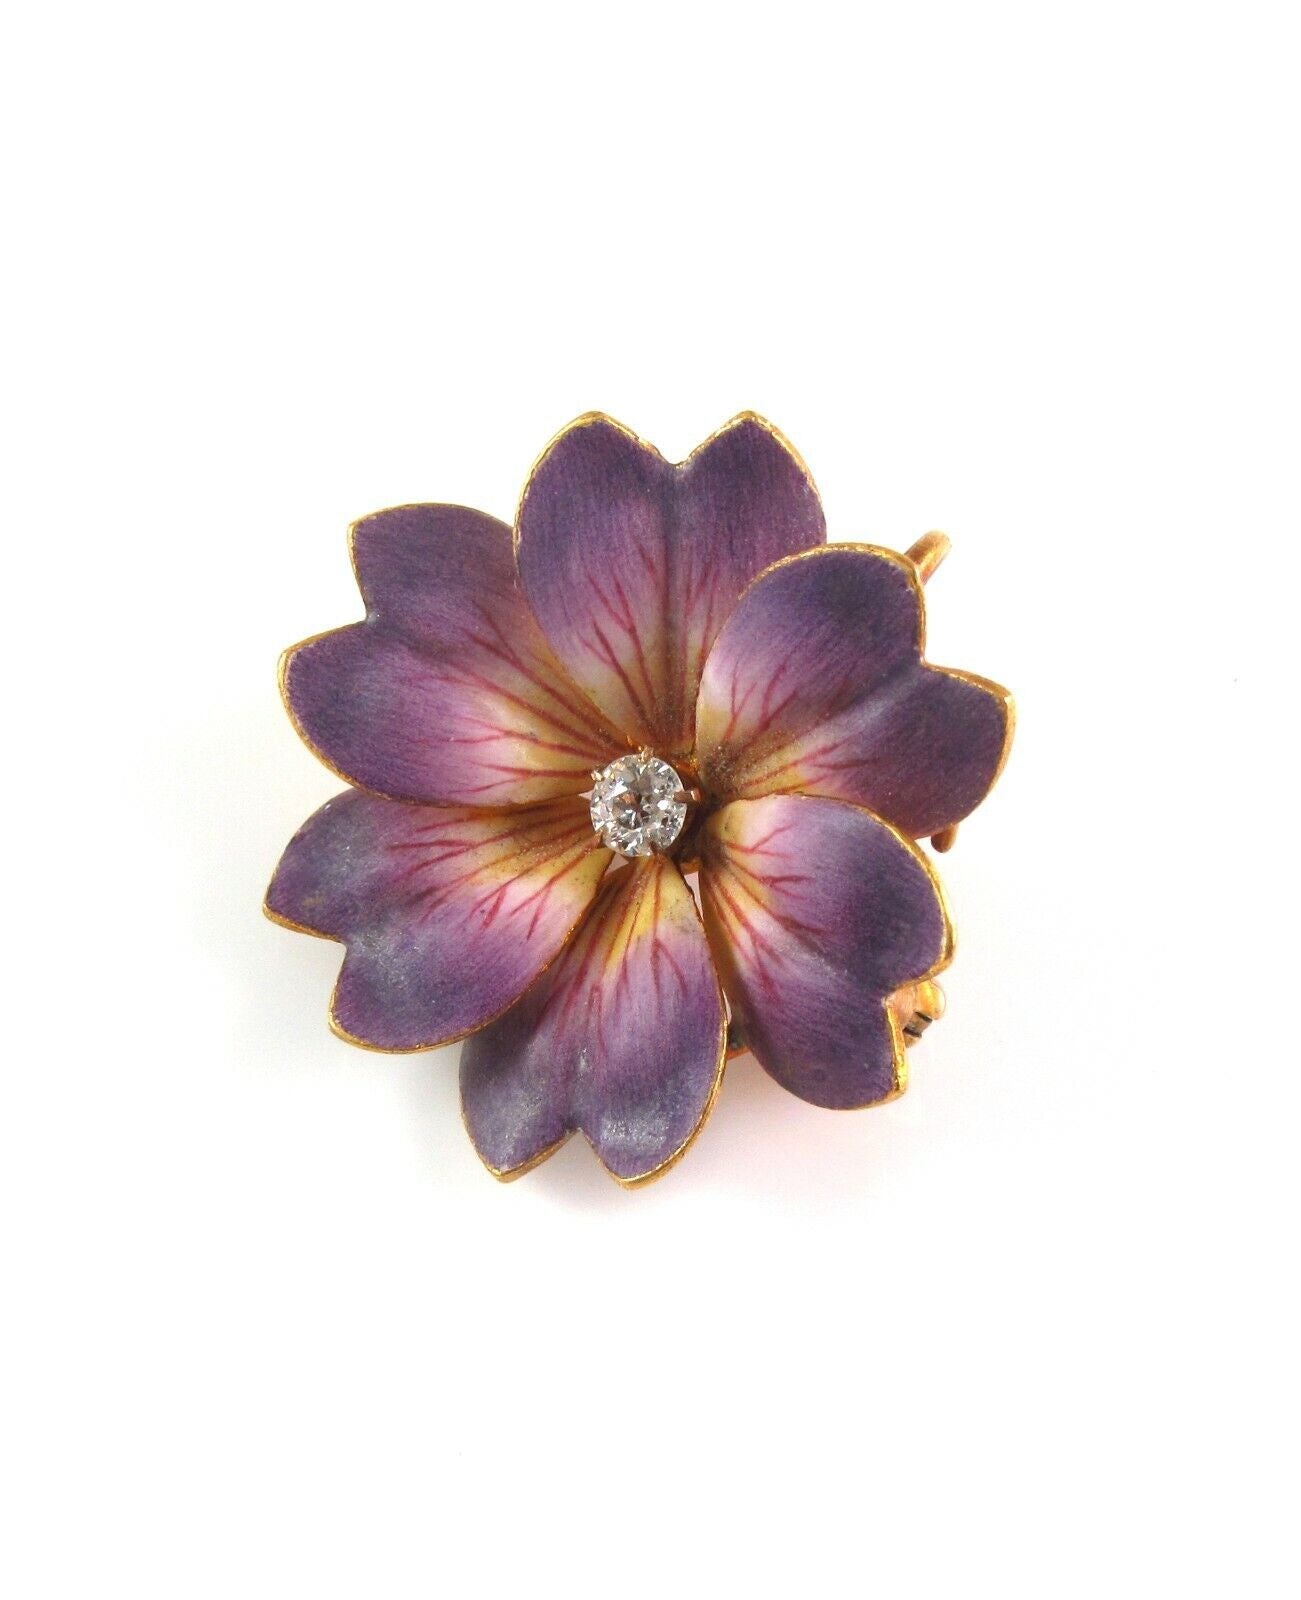 Carter Gough 14k Gold Art Nouveau Enamel Diamond Violet Flower Watch Pin Brooch